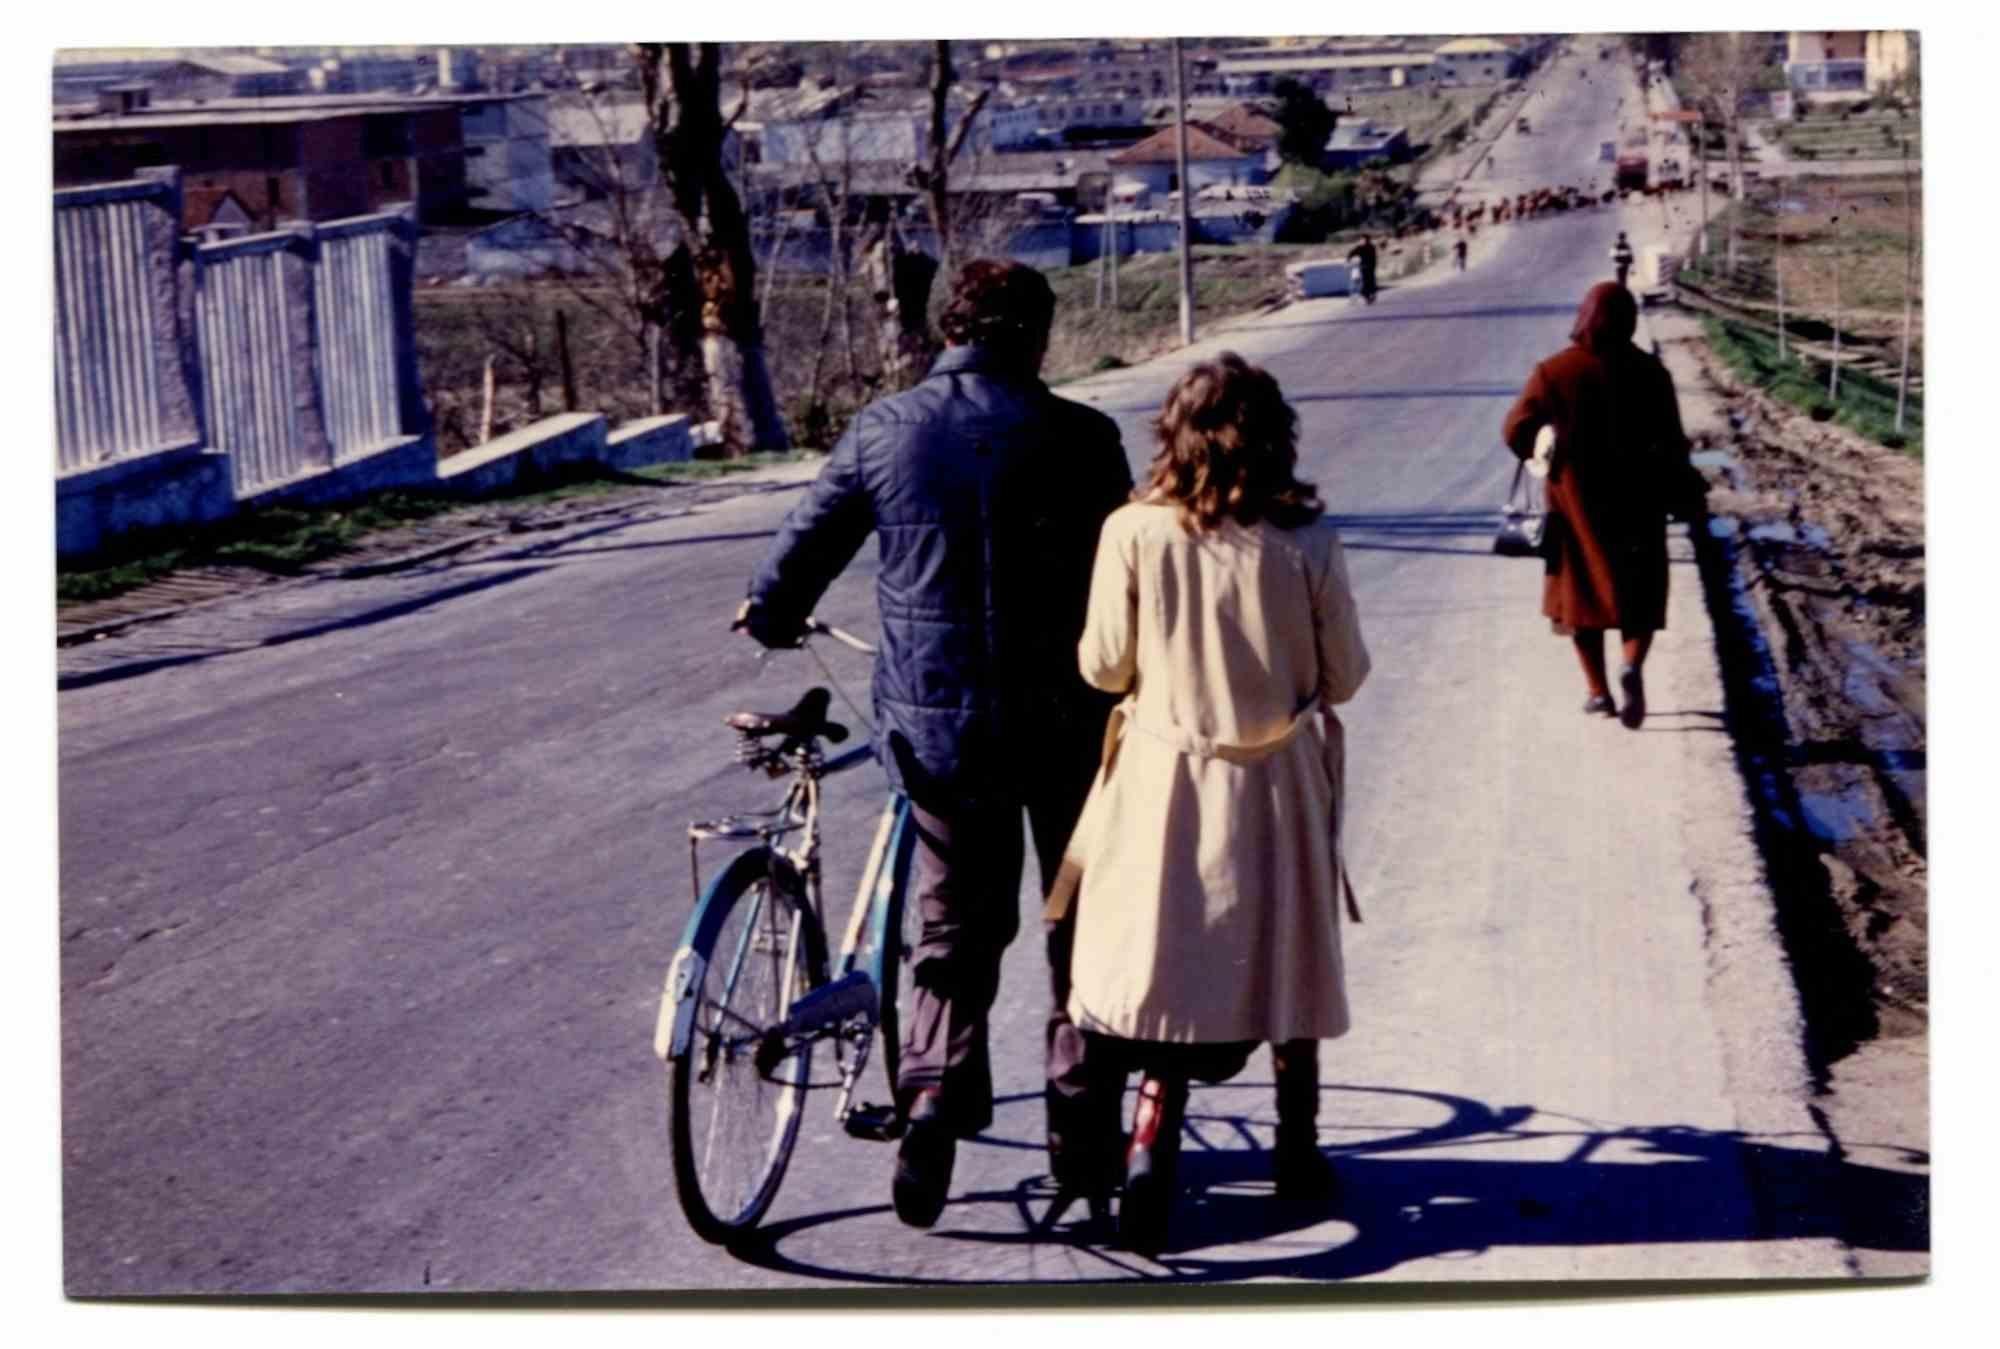 Unknown Landscape Photograph - Reportage from Albania - Tirana - Photograph - 1970s